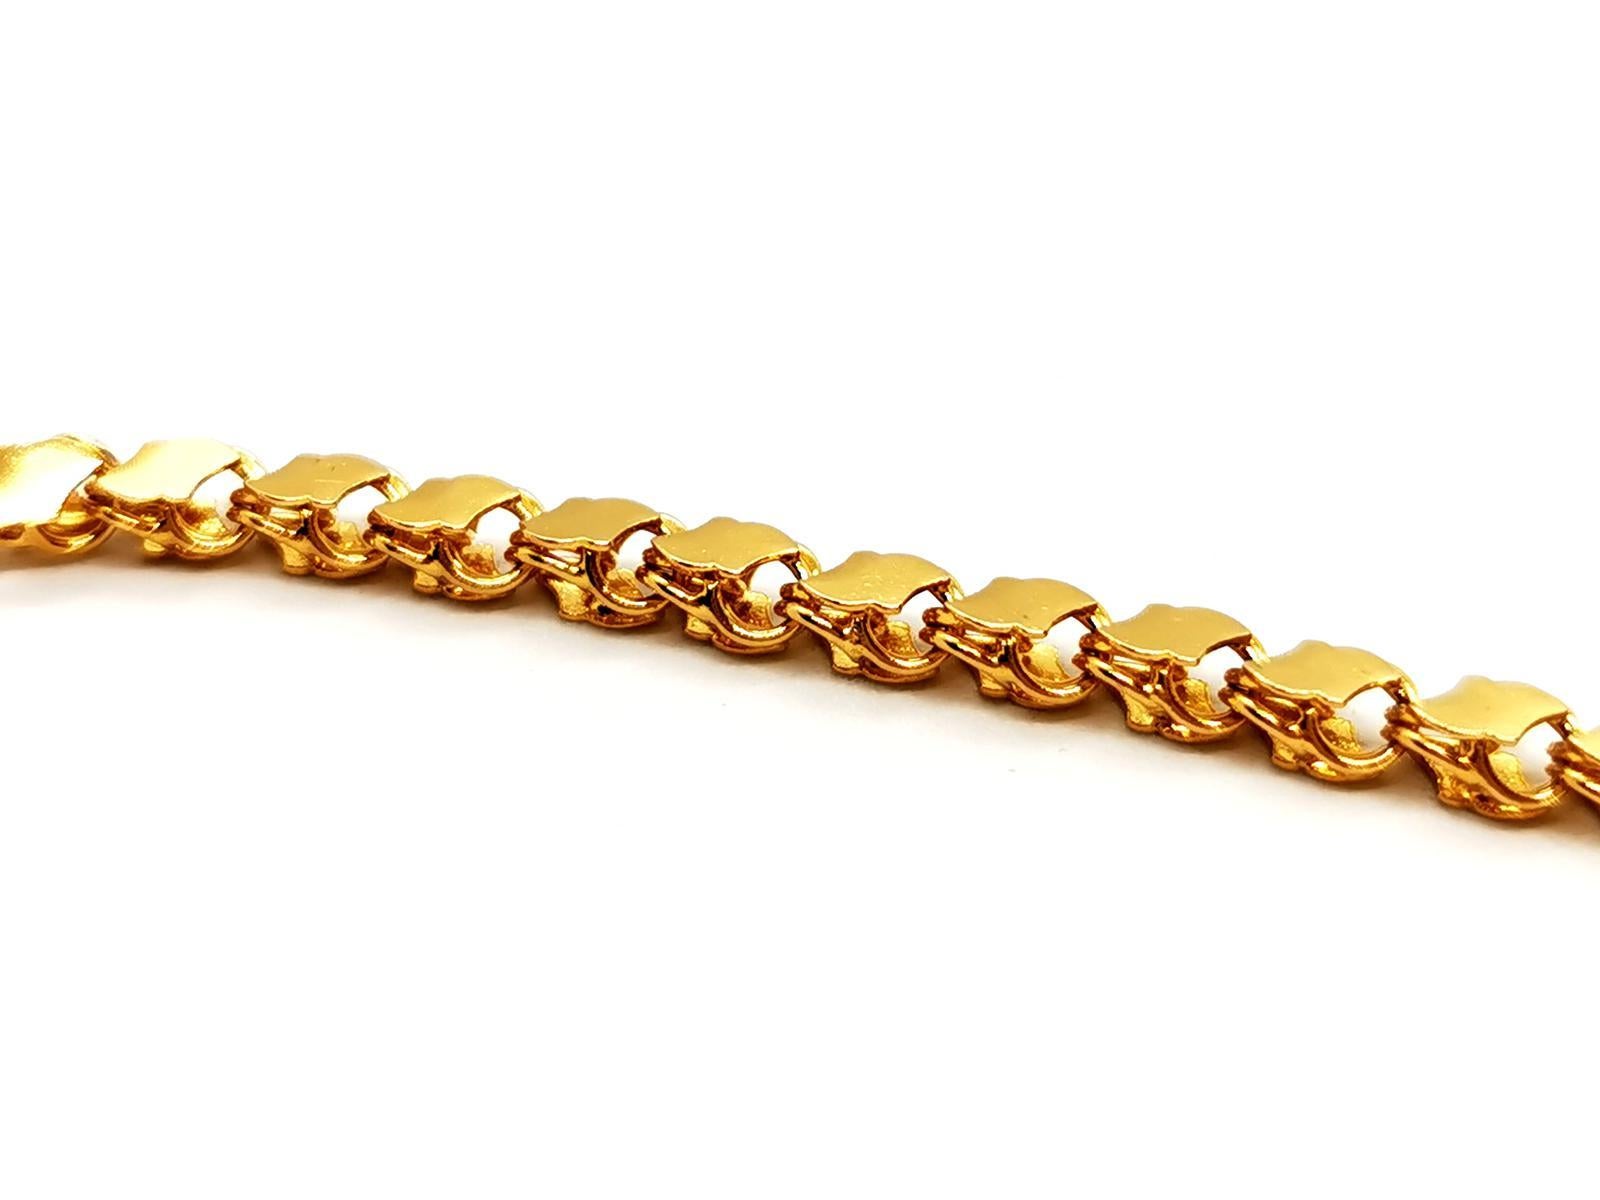 875 gold chain